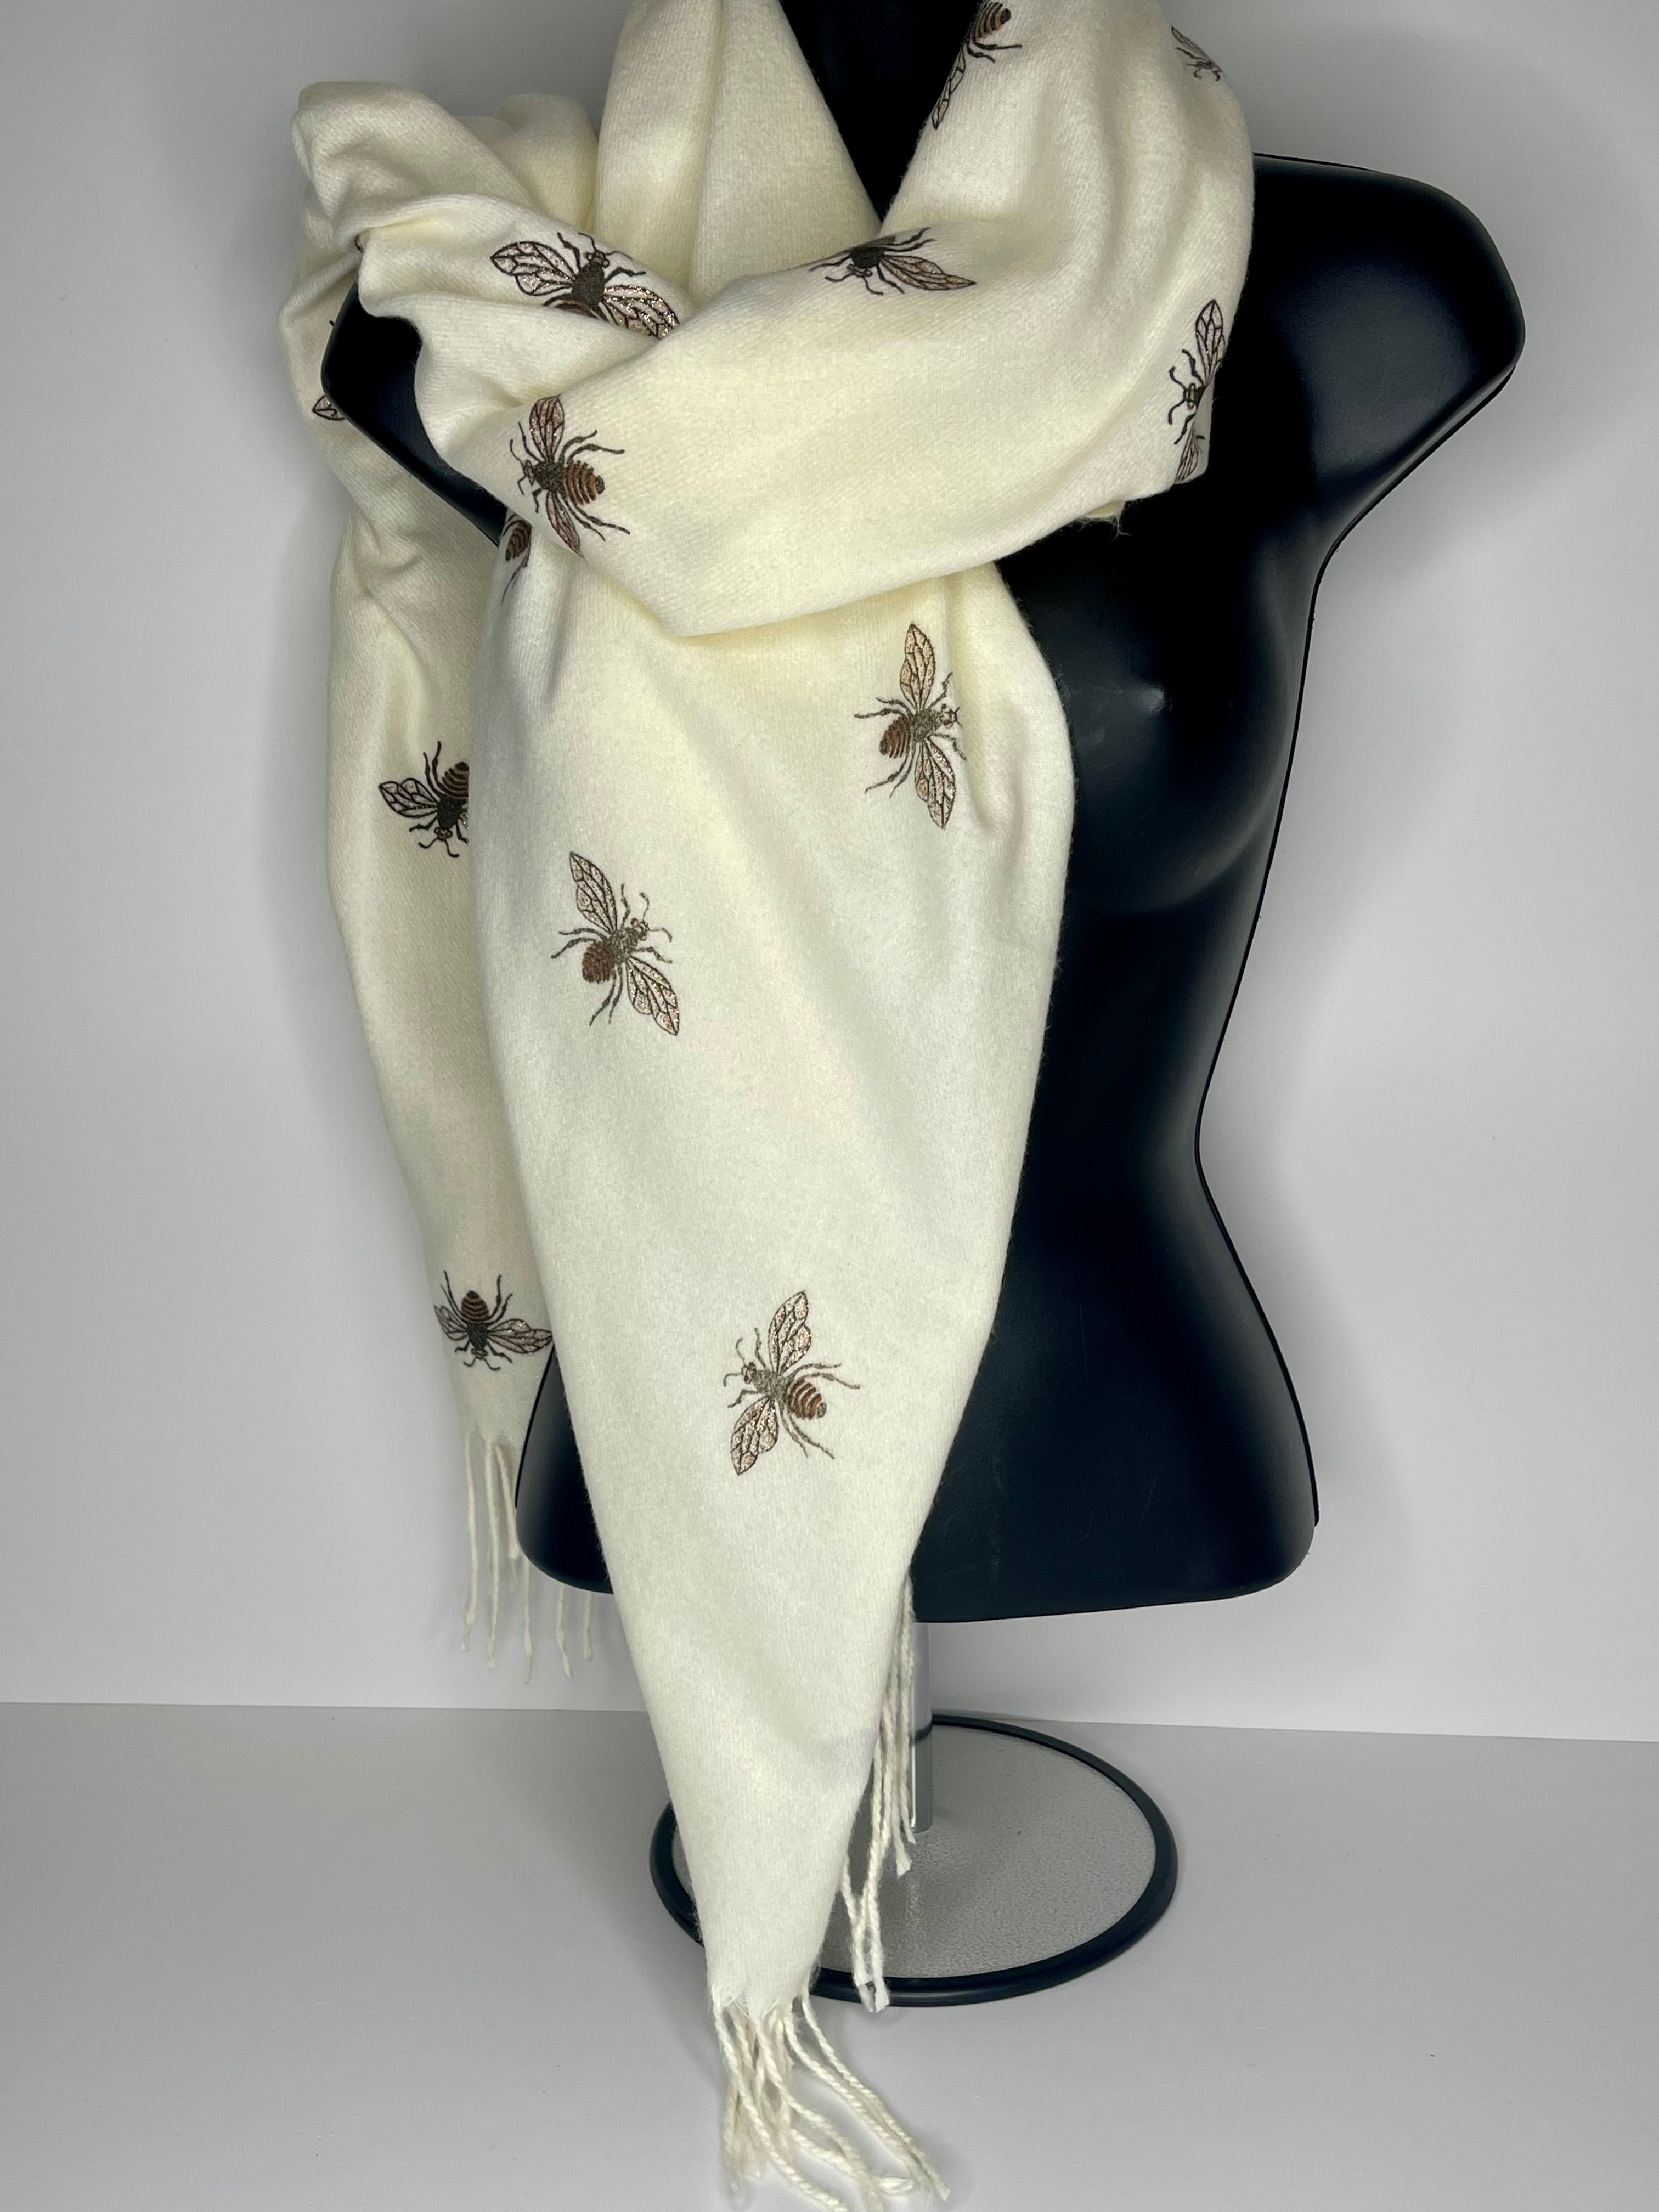 Winter weight, cashmere-blend, glitter bee print scarf in winter white